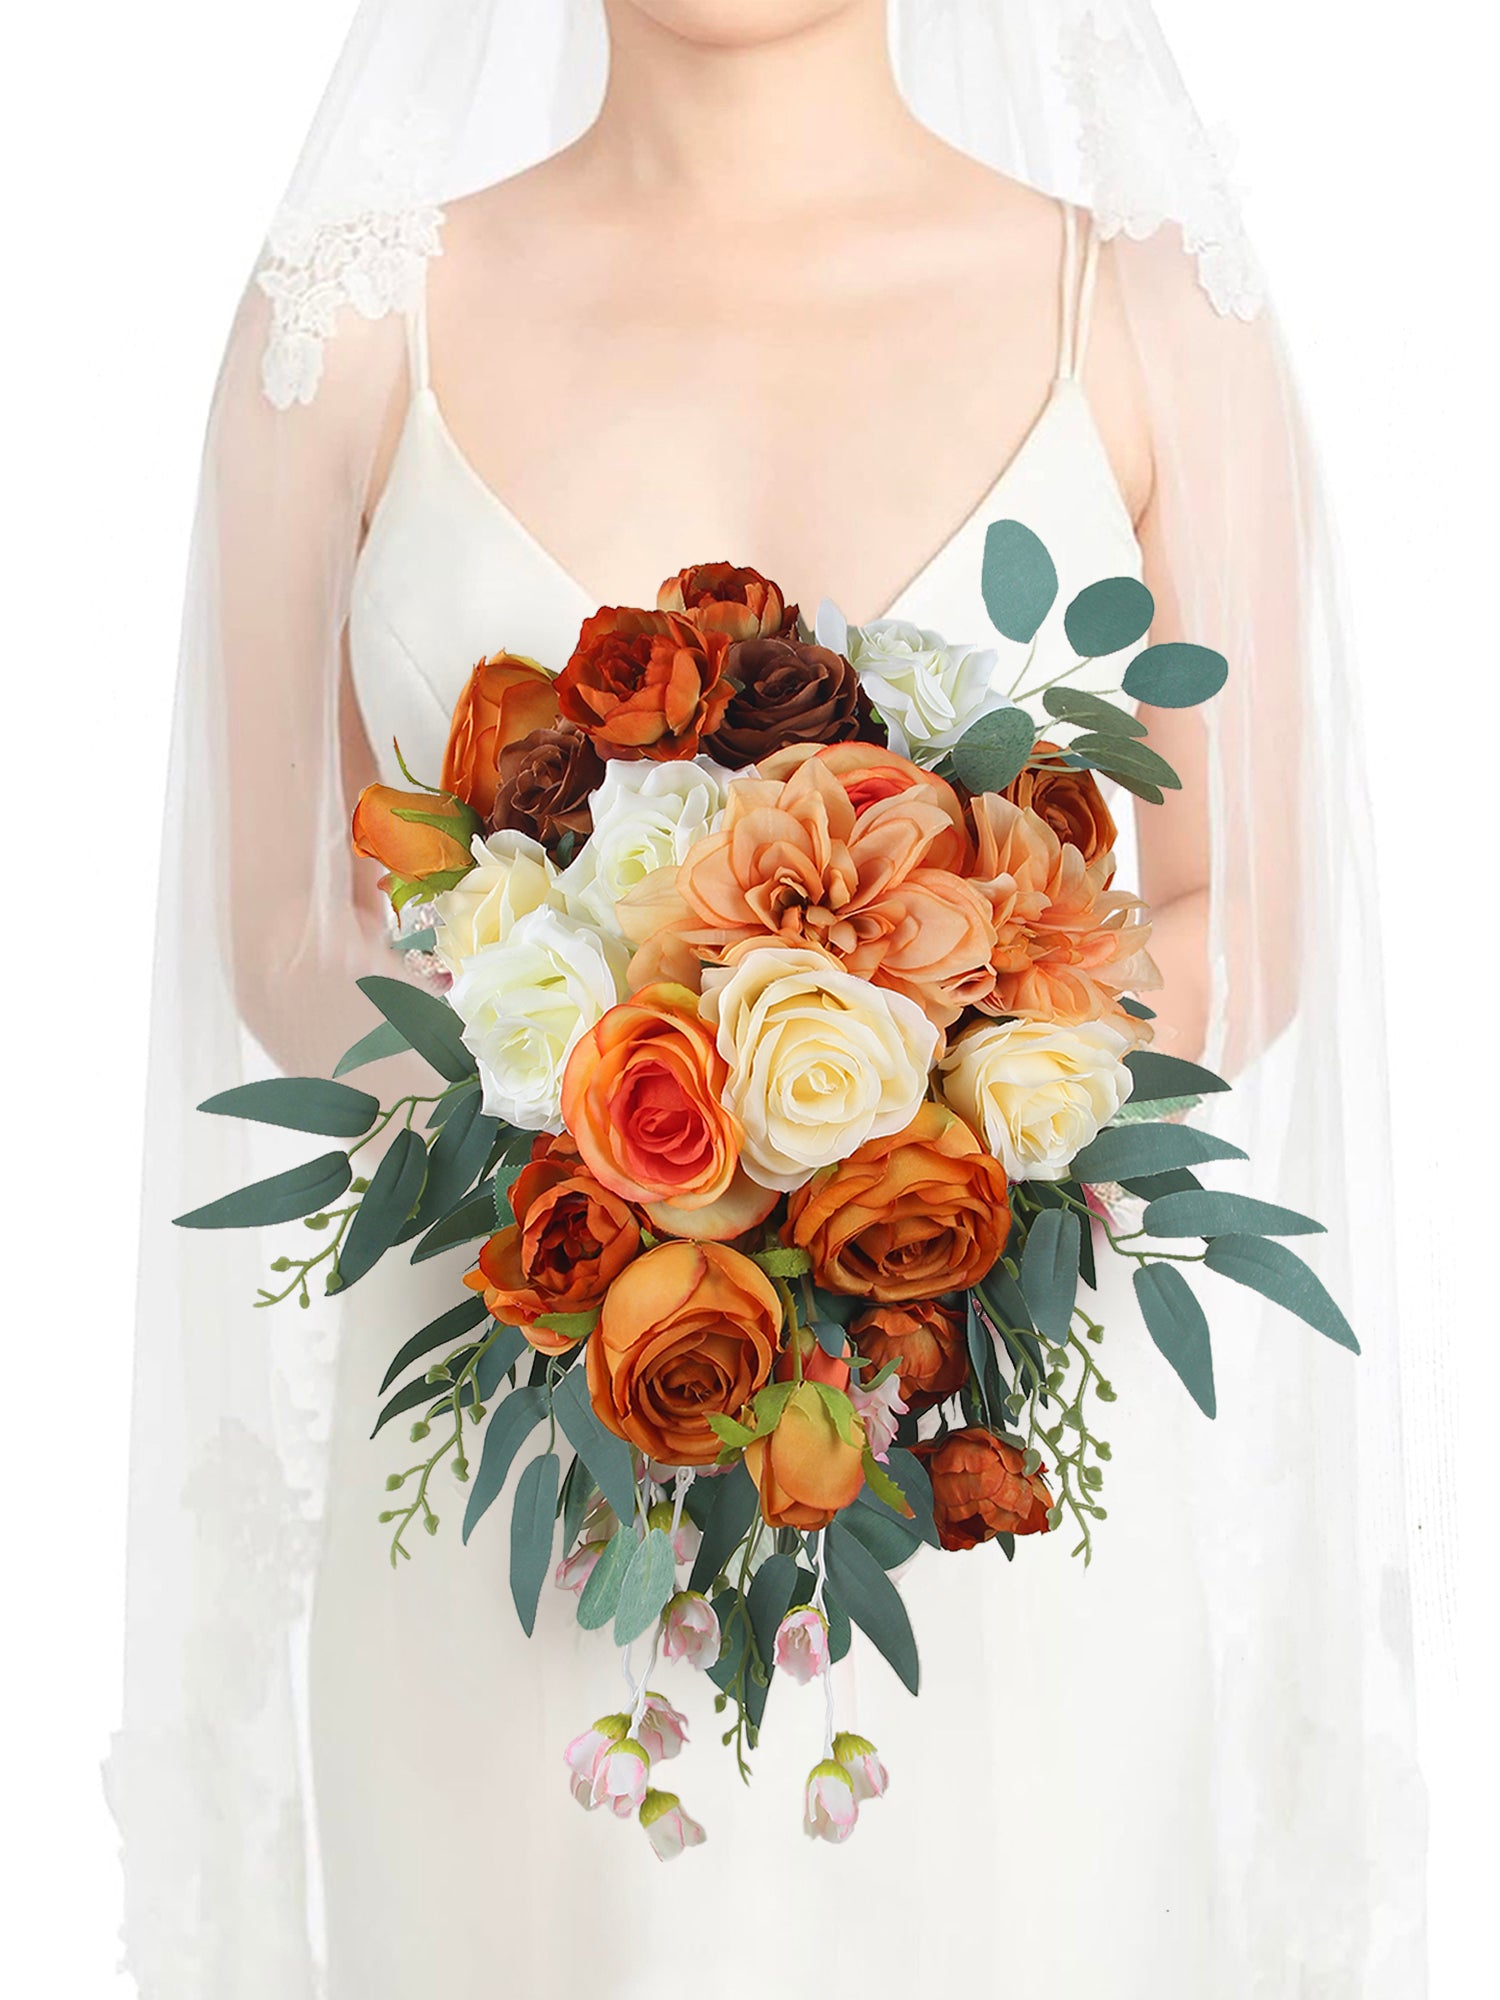 11.8 inch wide Burnt Orange Cascade Bridal Bouquet